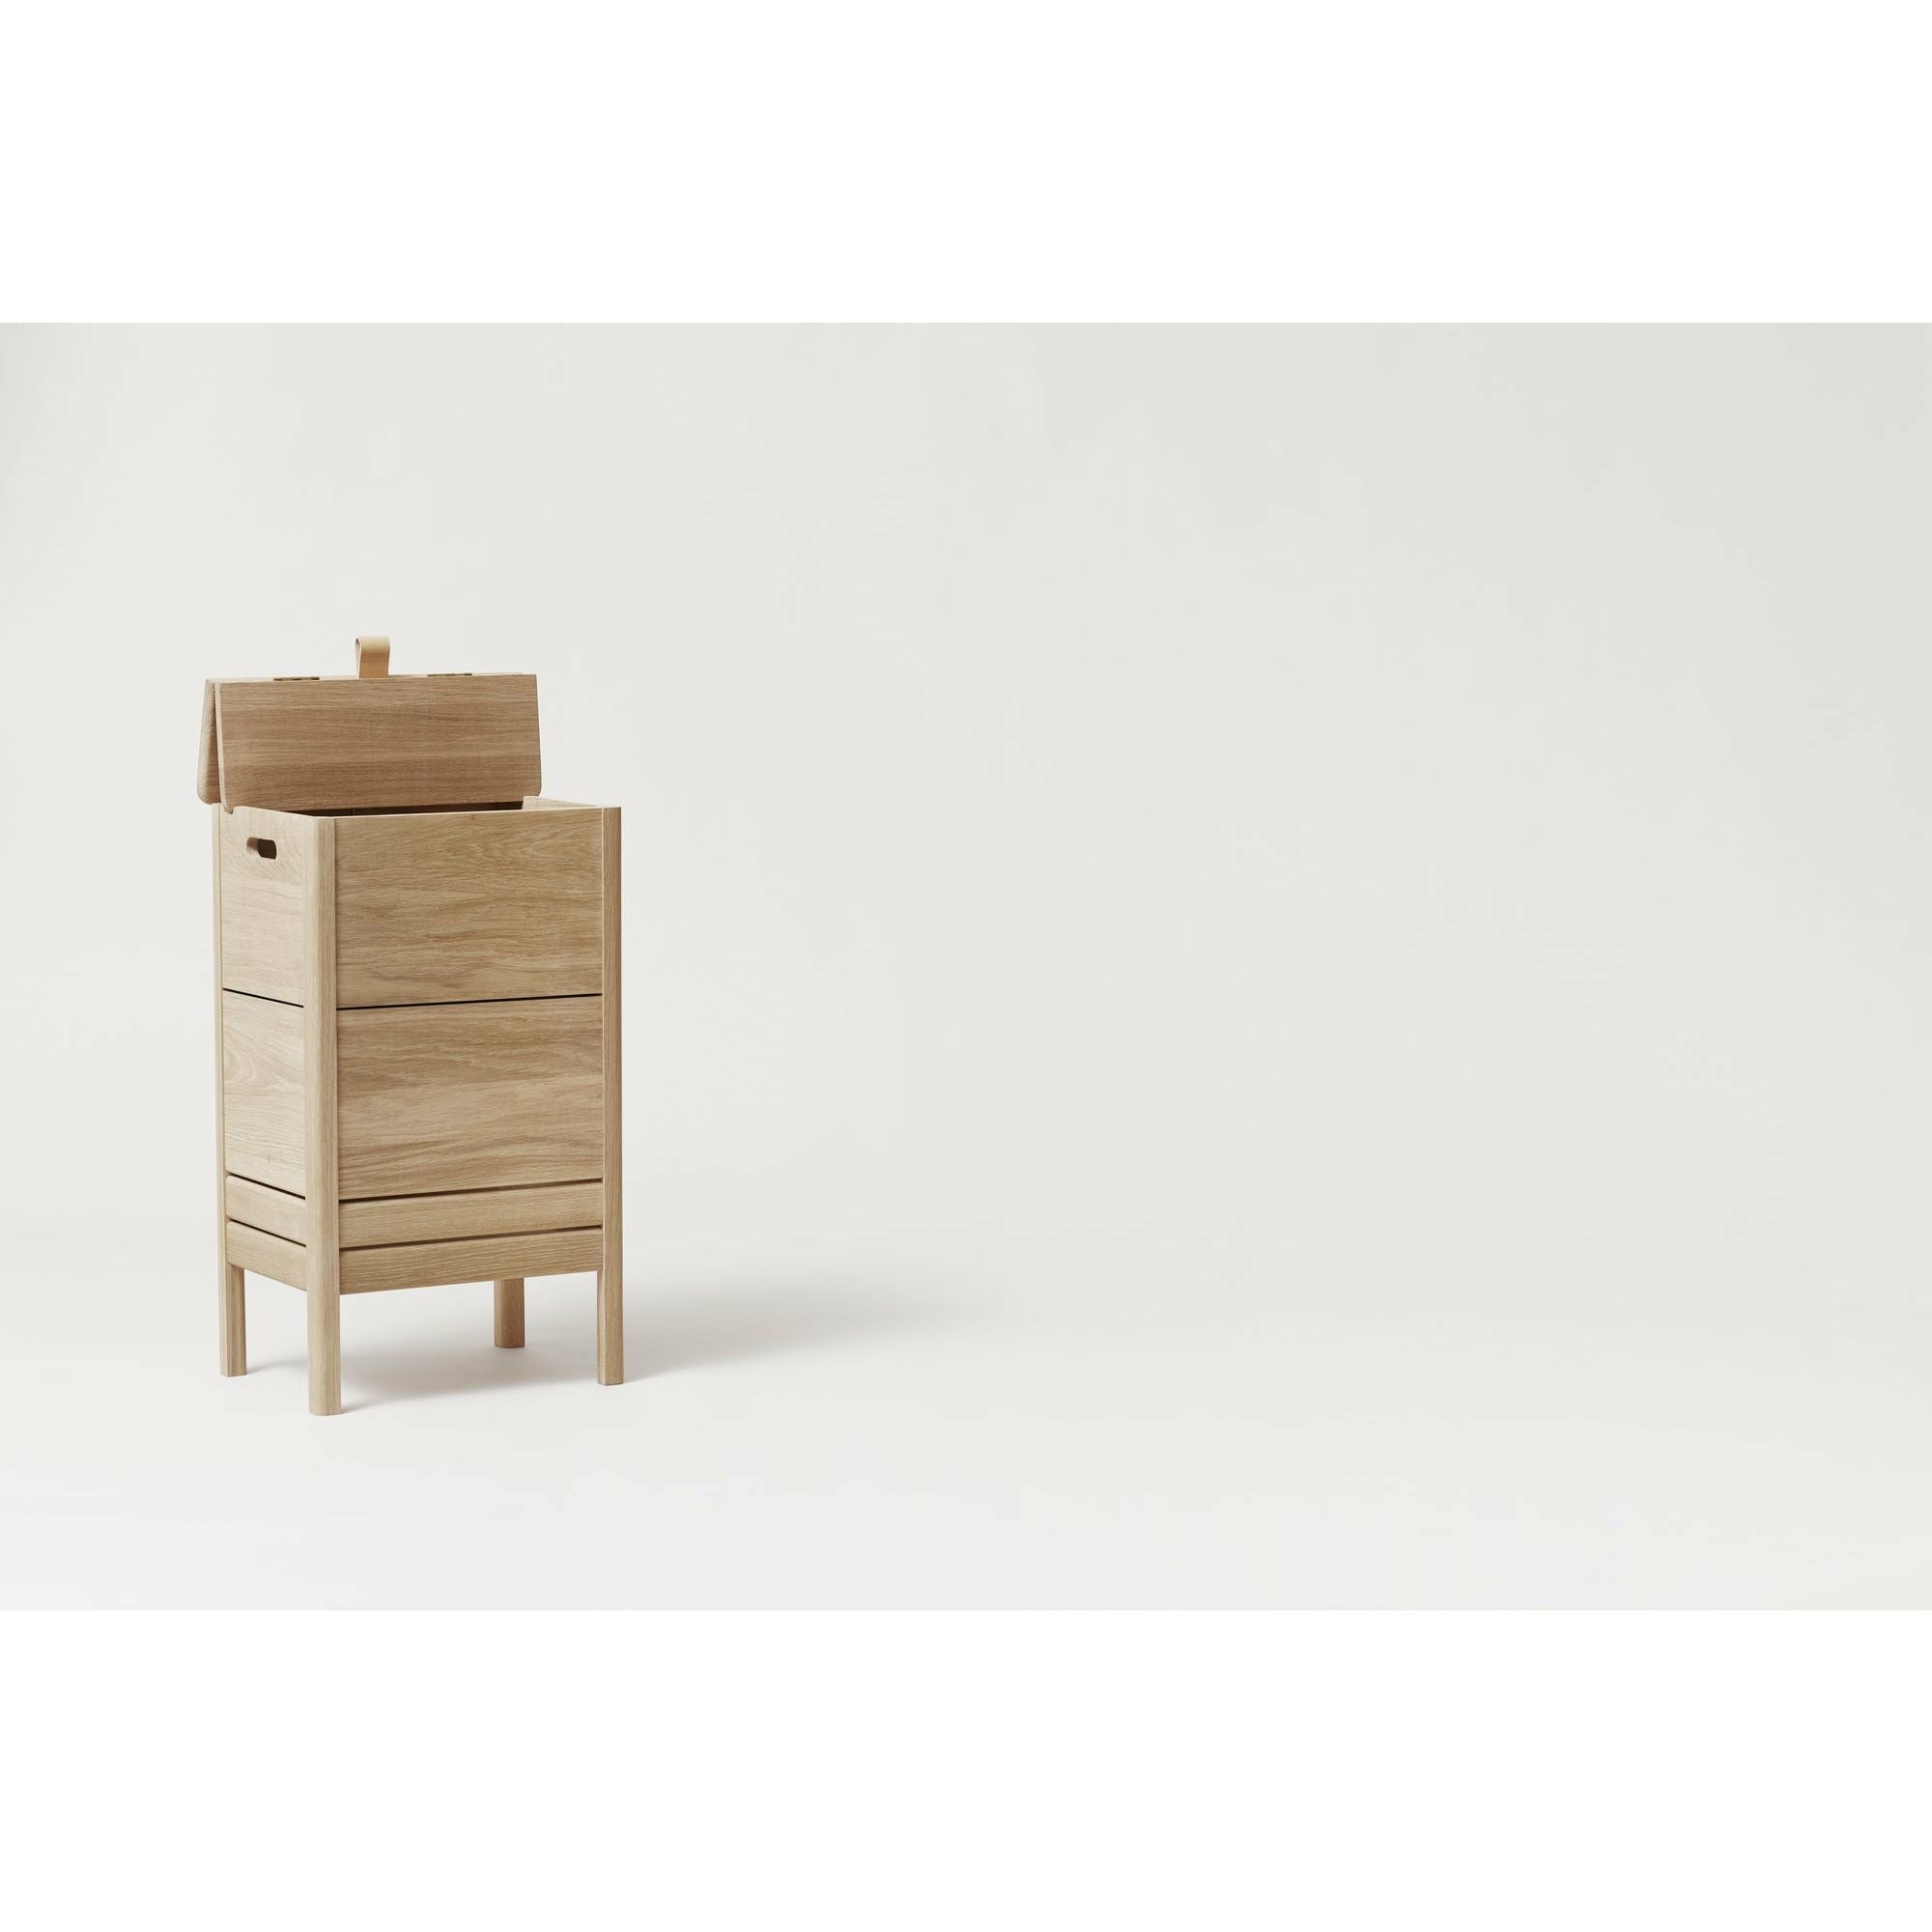 Form & Refine A Line Laundry Box. White Oak